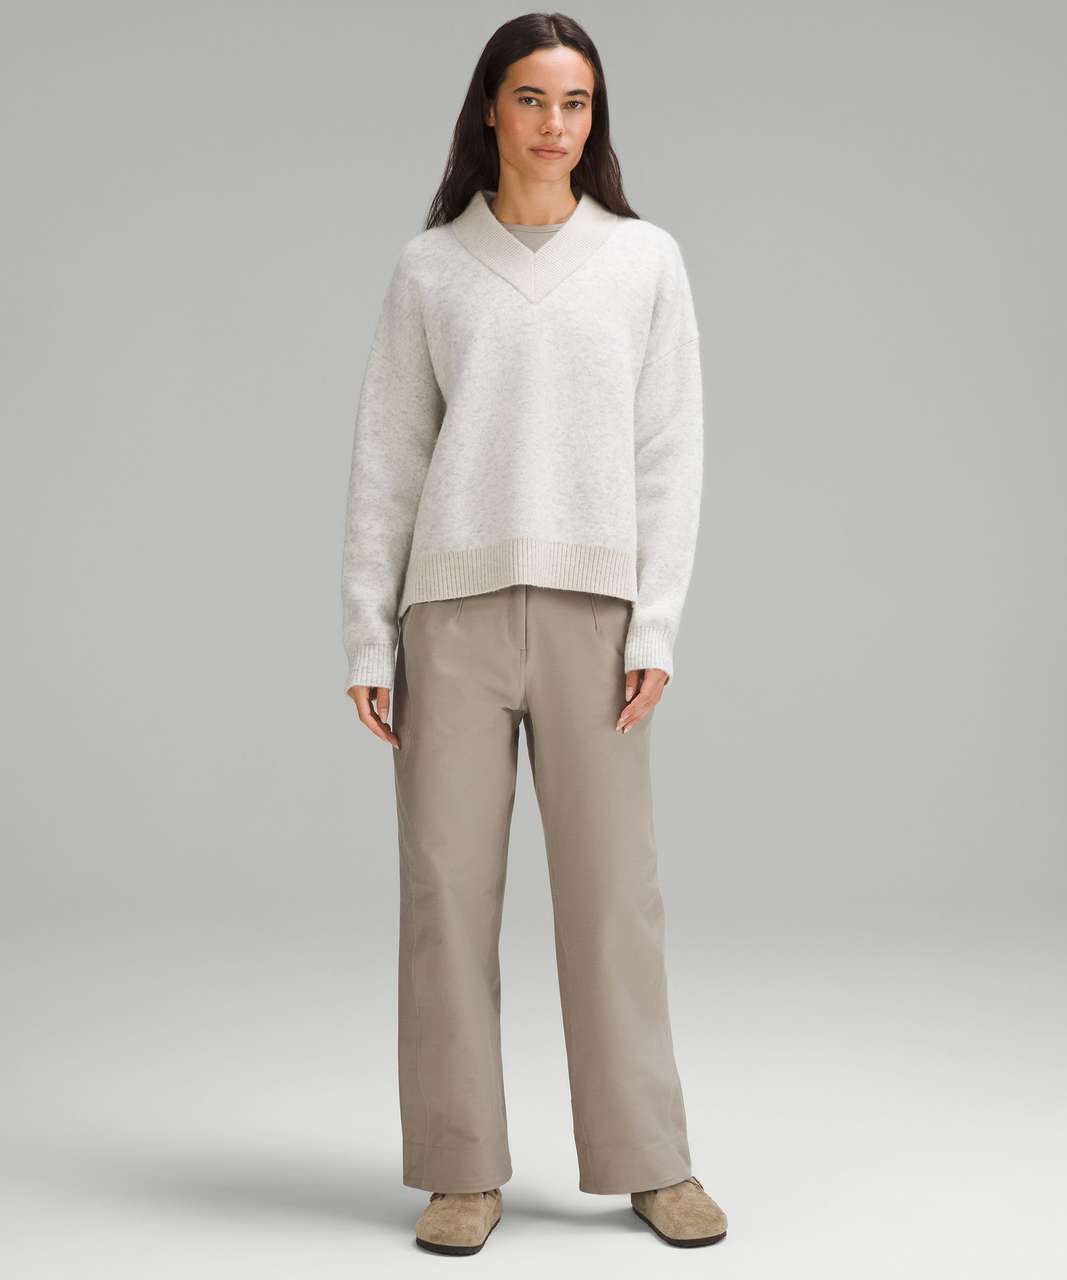 Lululemon Alpaca Wool-Blend V-Neck Sweater - Heathered Light Grey